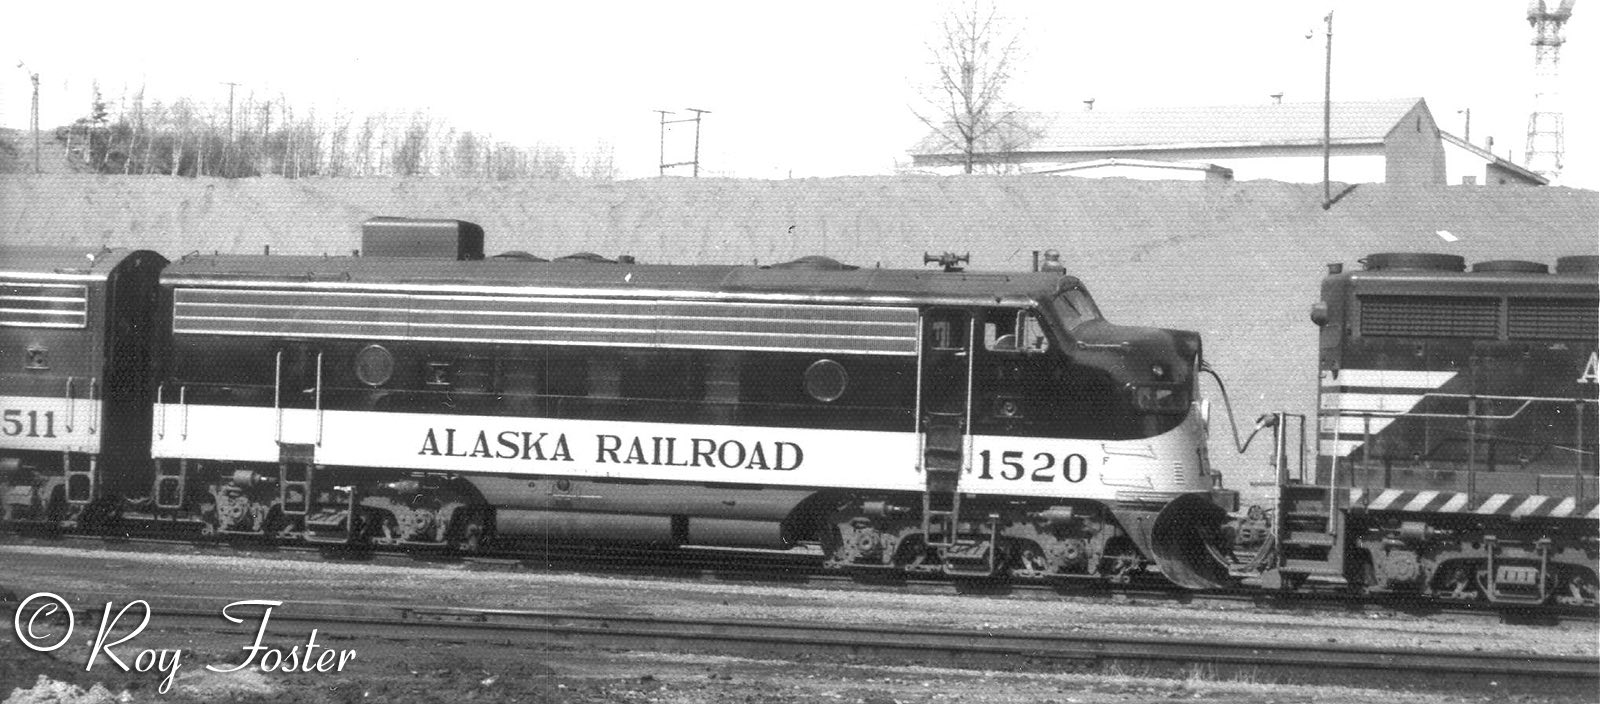 ARR 1520, Anchorage, 4-29-74